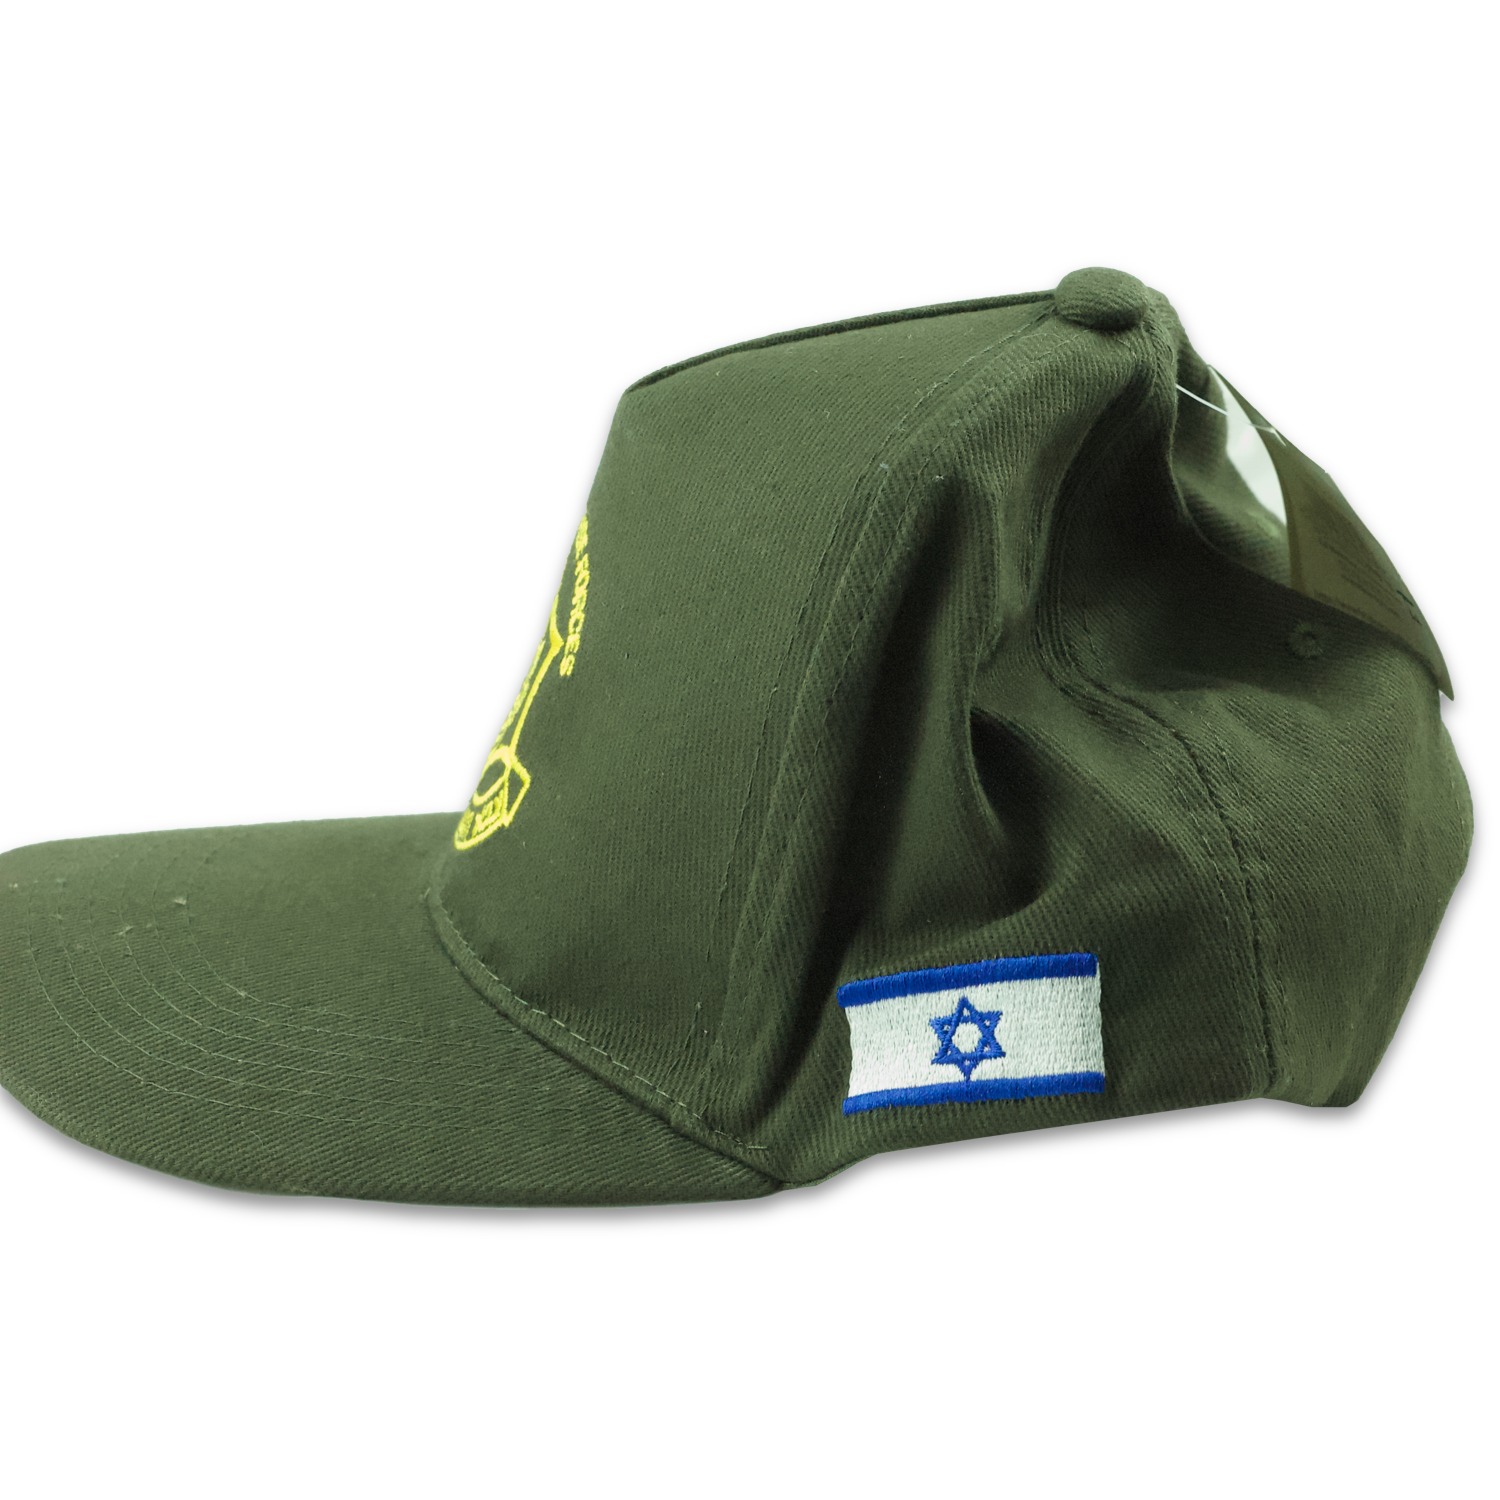 IDF baseball cap with Velcro patch panel – JLMBOX